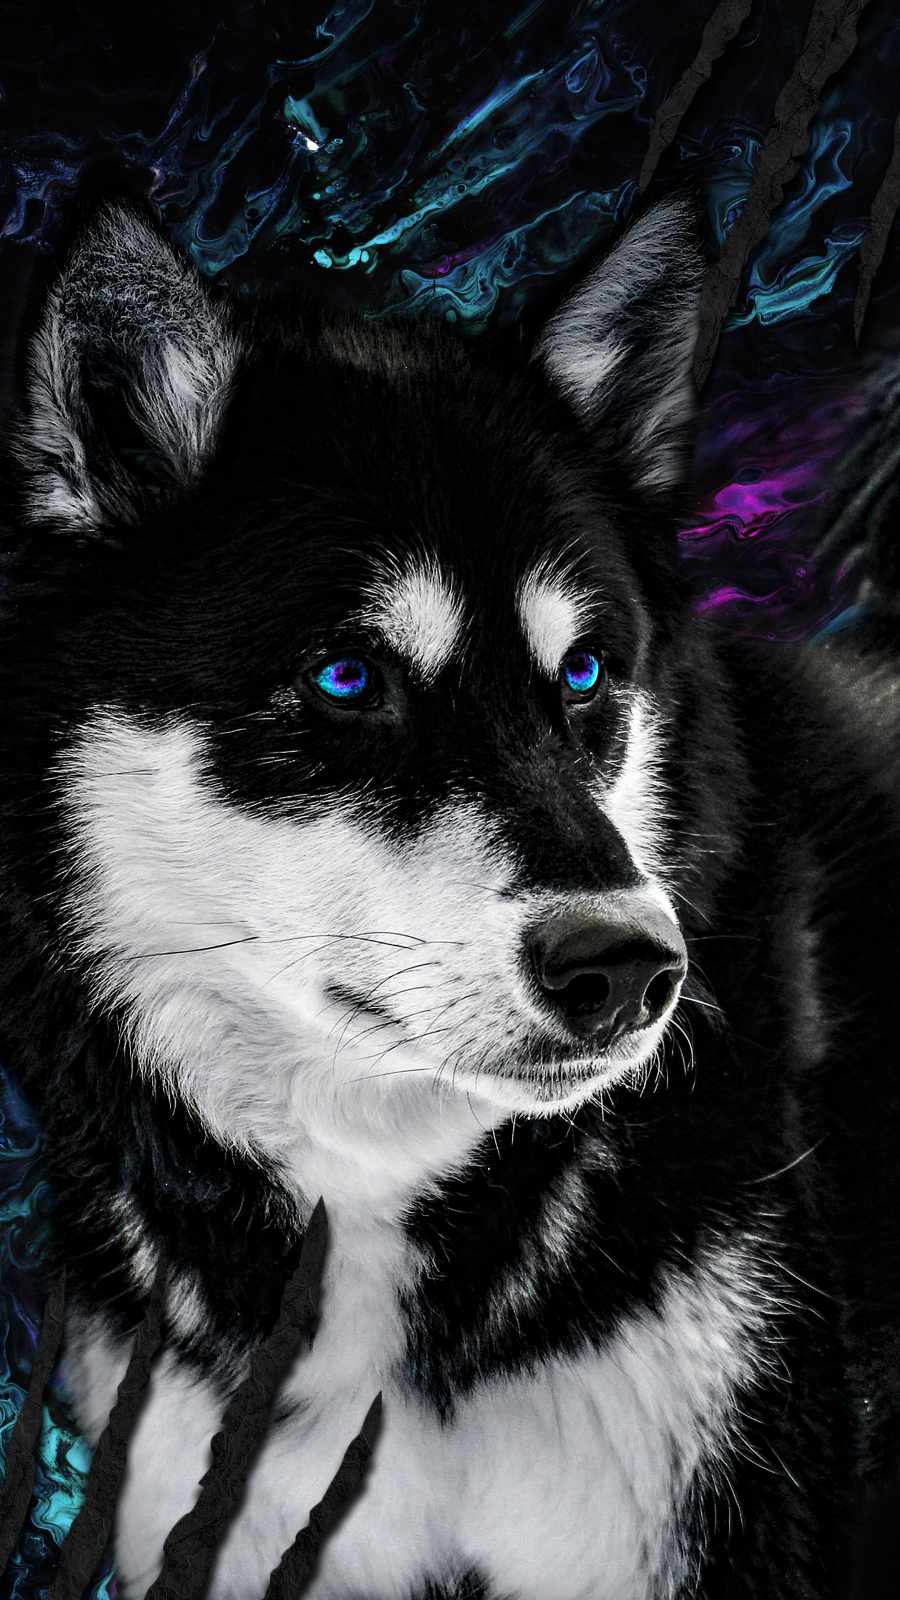 Husky Dog IPhone Wallpaper Wallpaper, iPhone Wallpaper